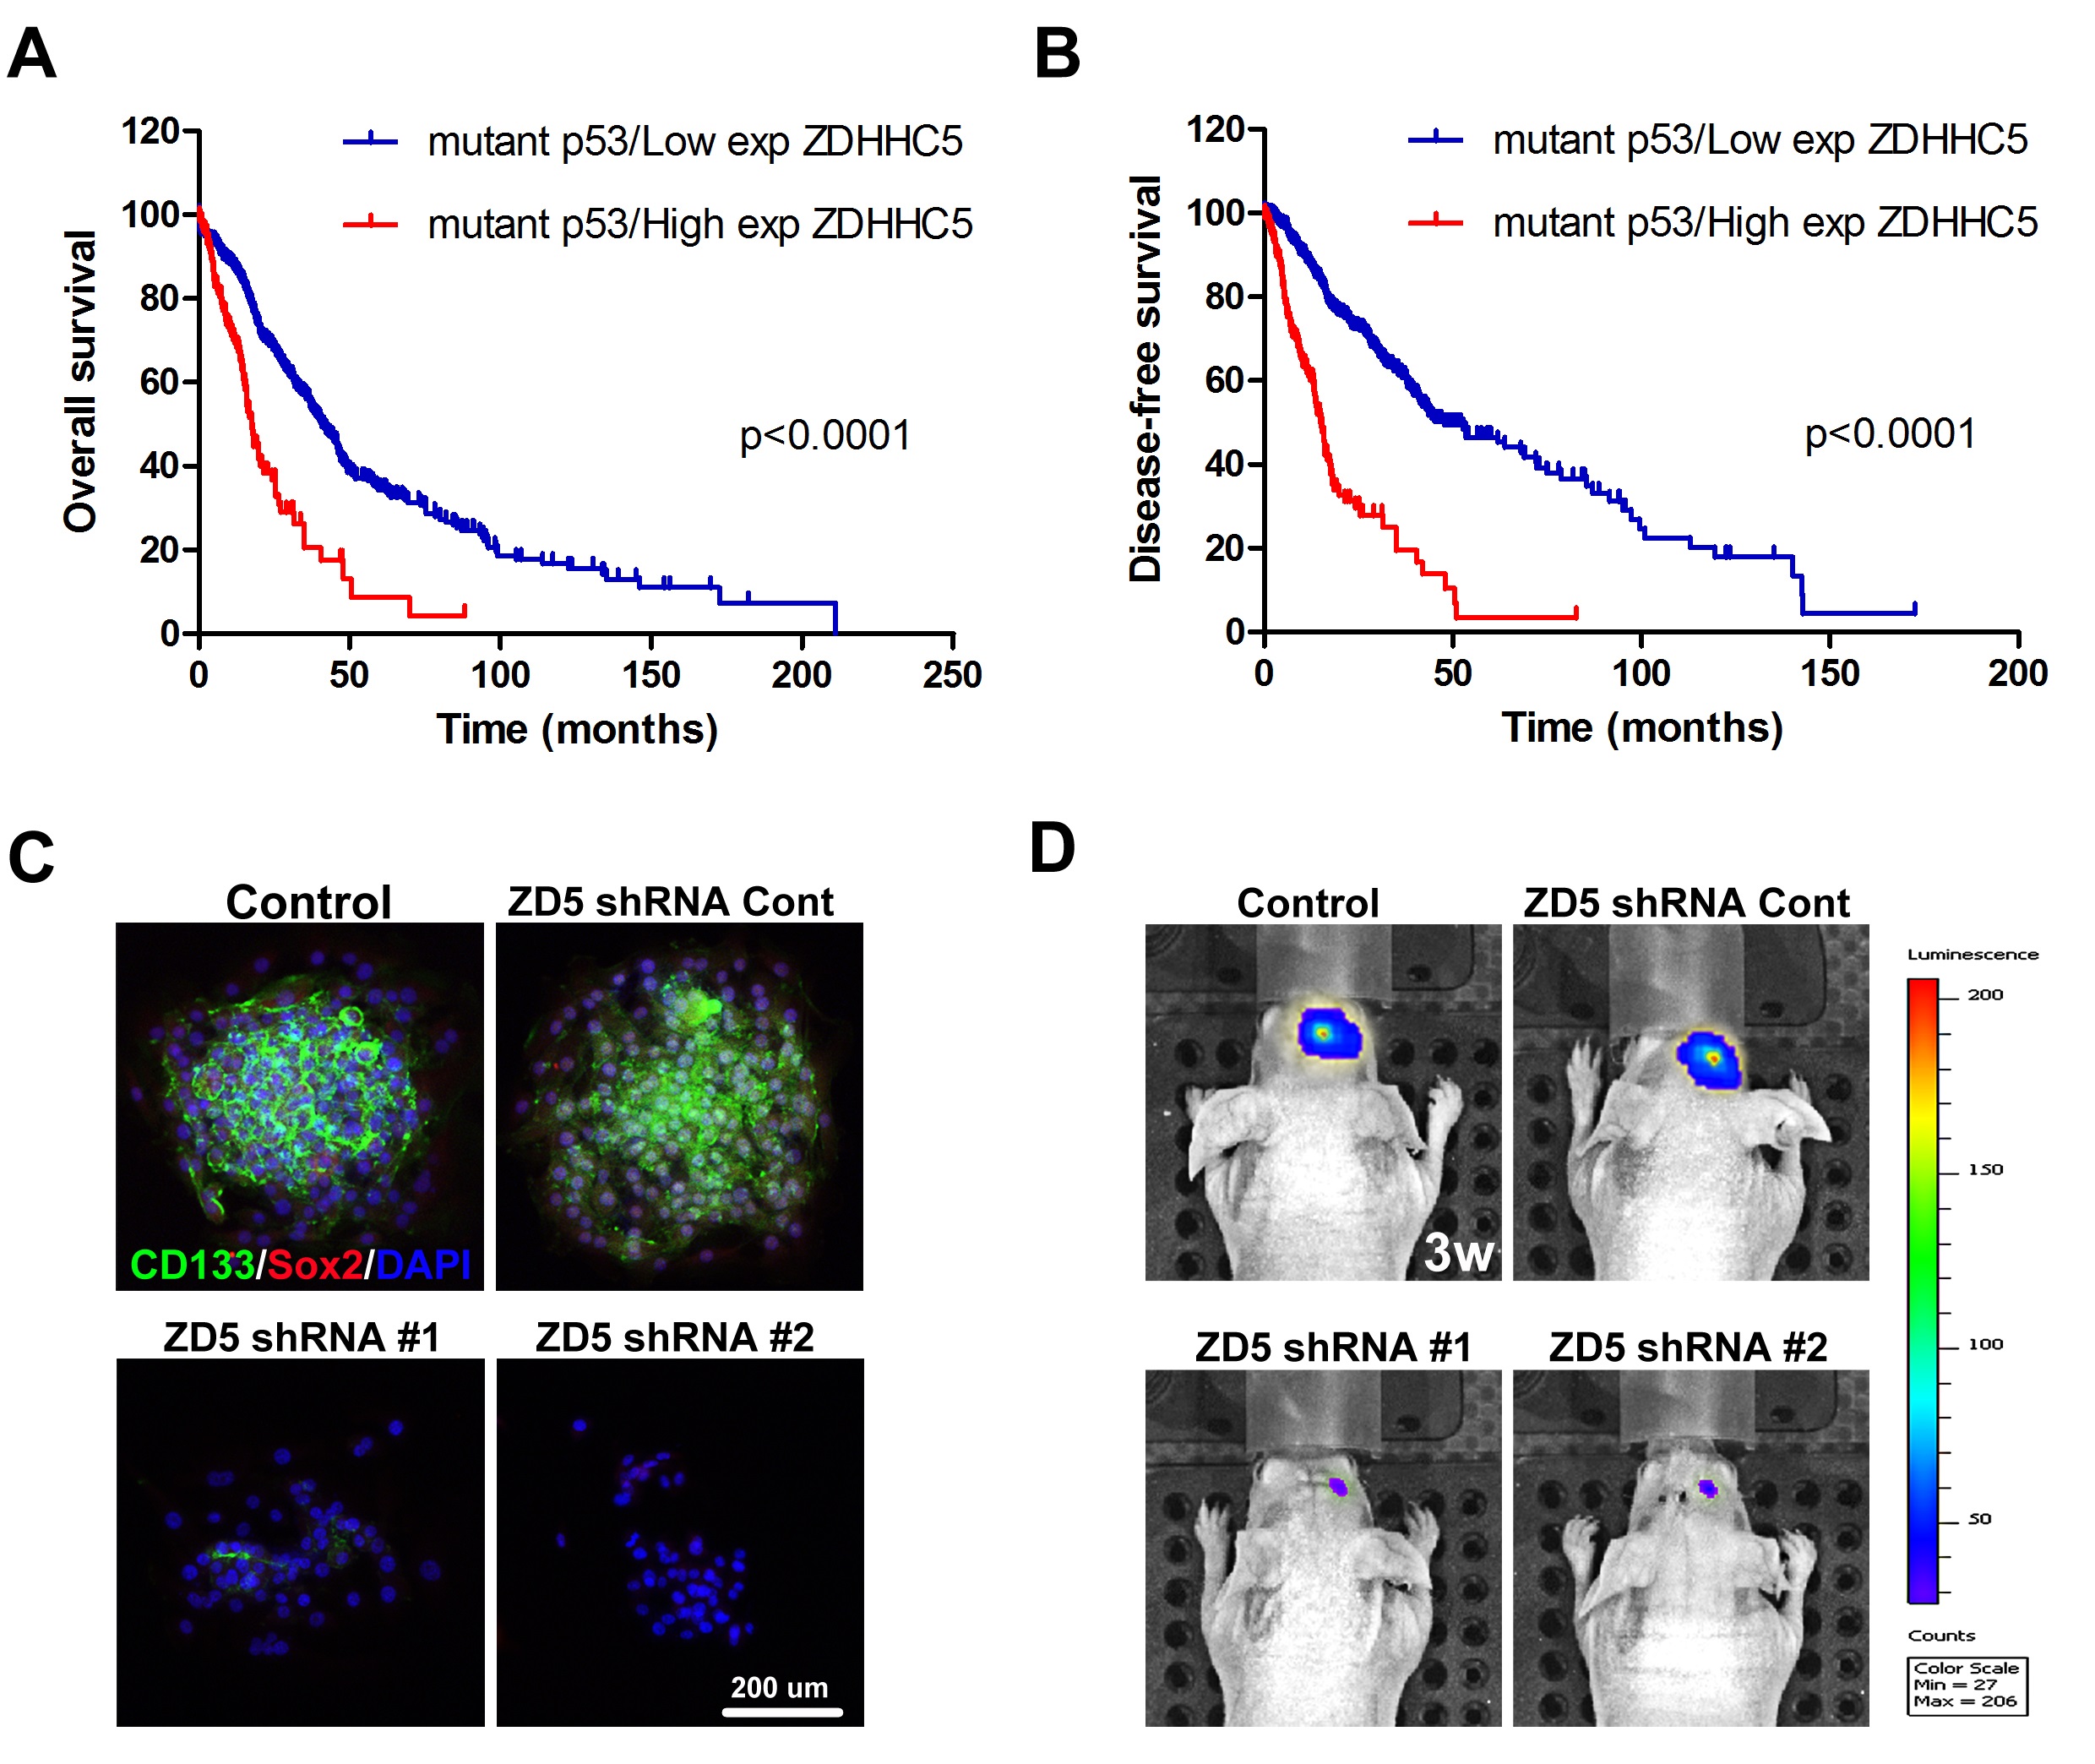 The role of ZDHHC5 in the development and progression of p53-mutant glioma